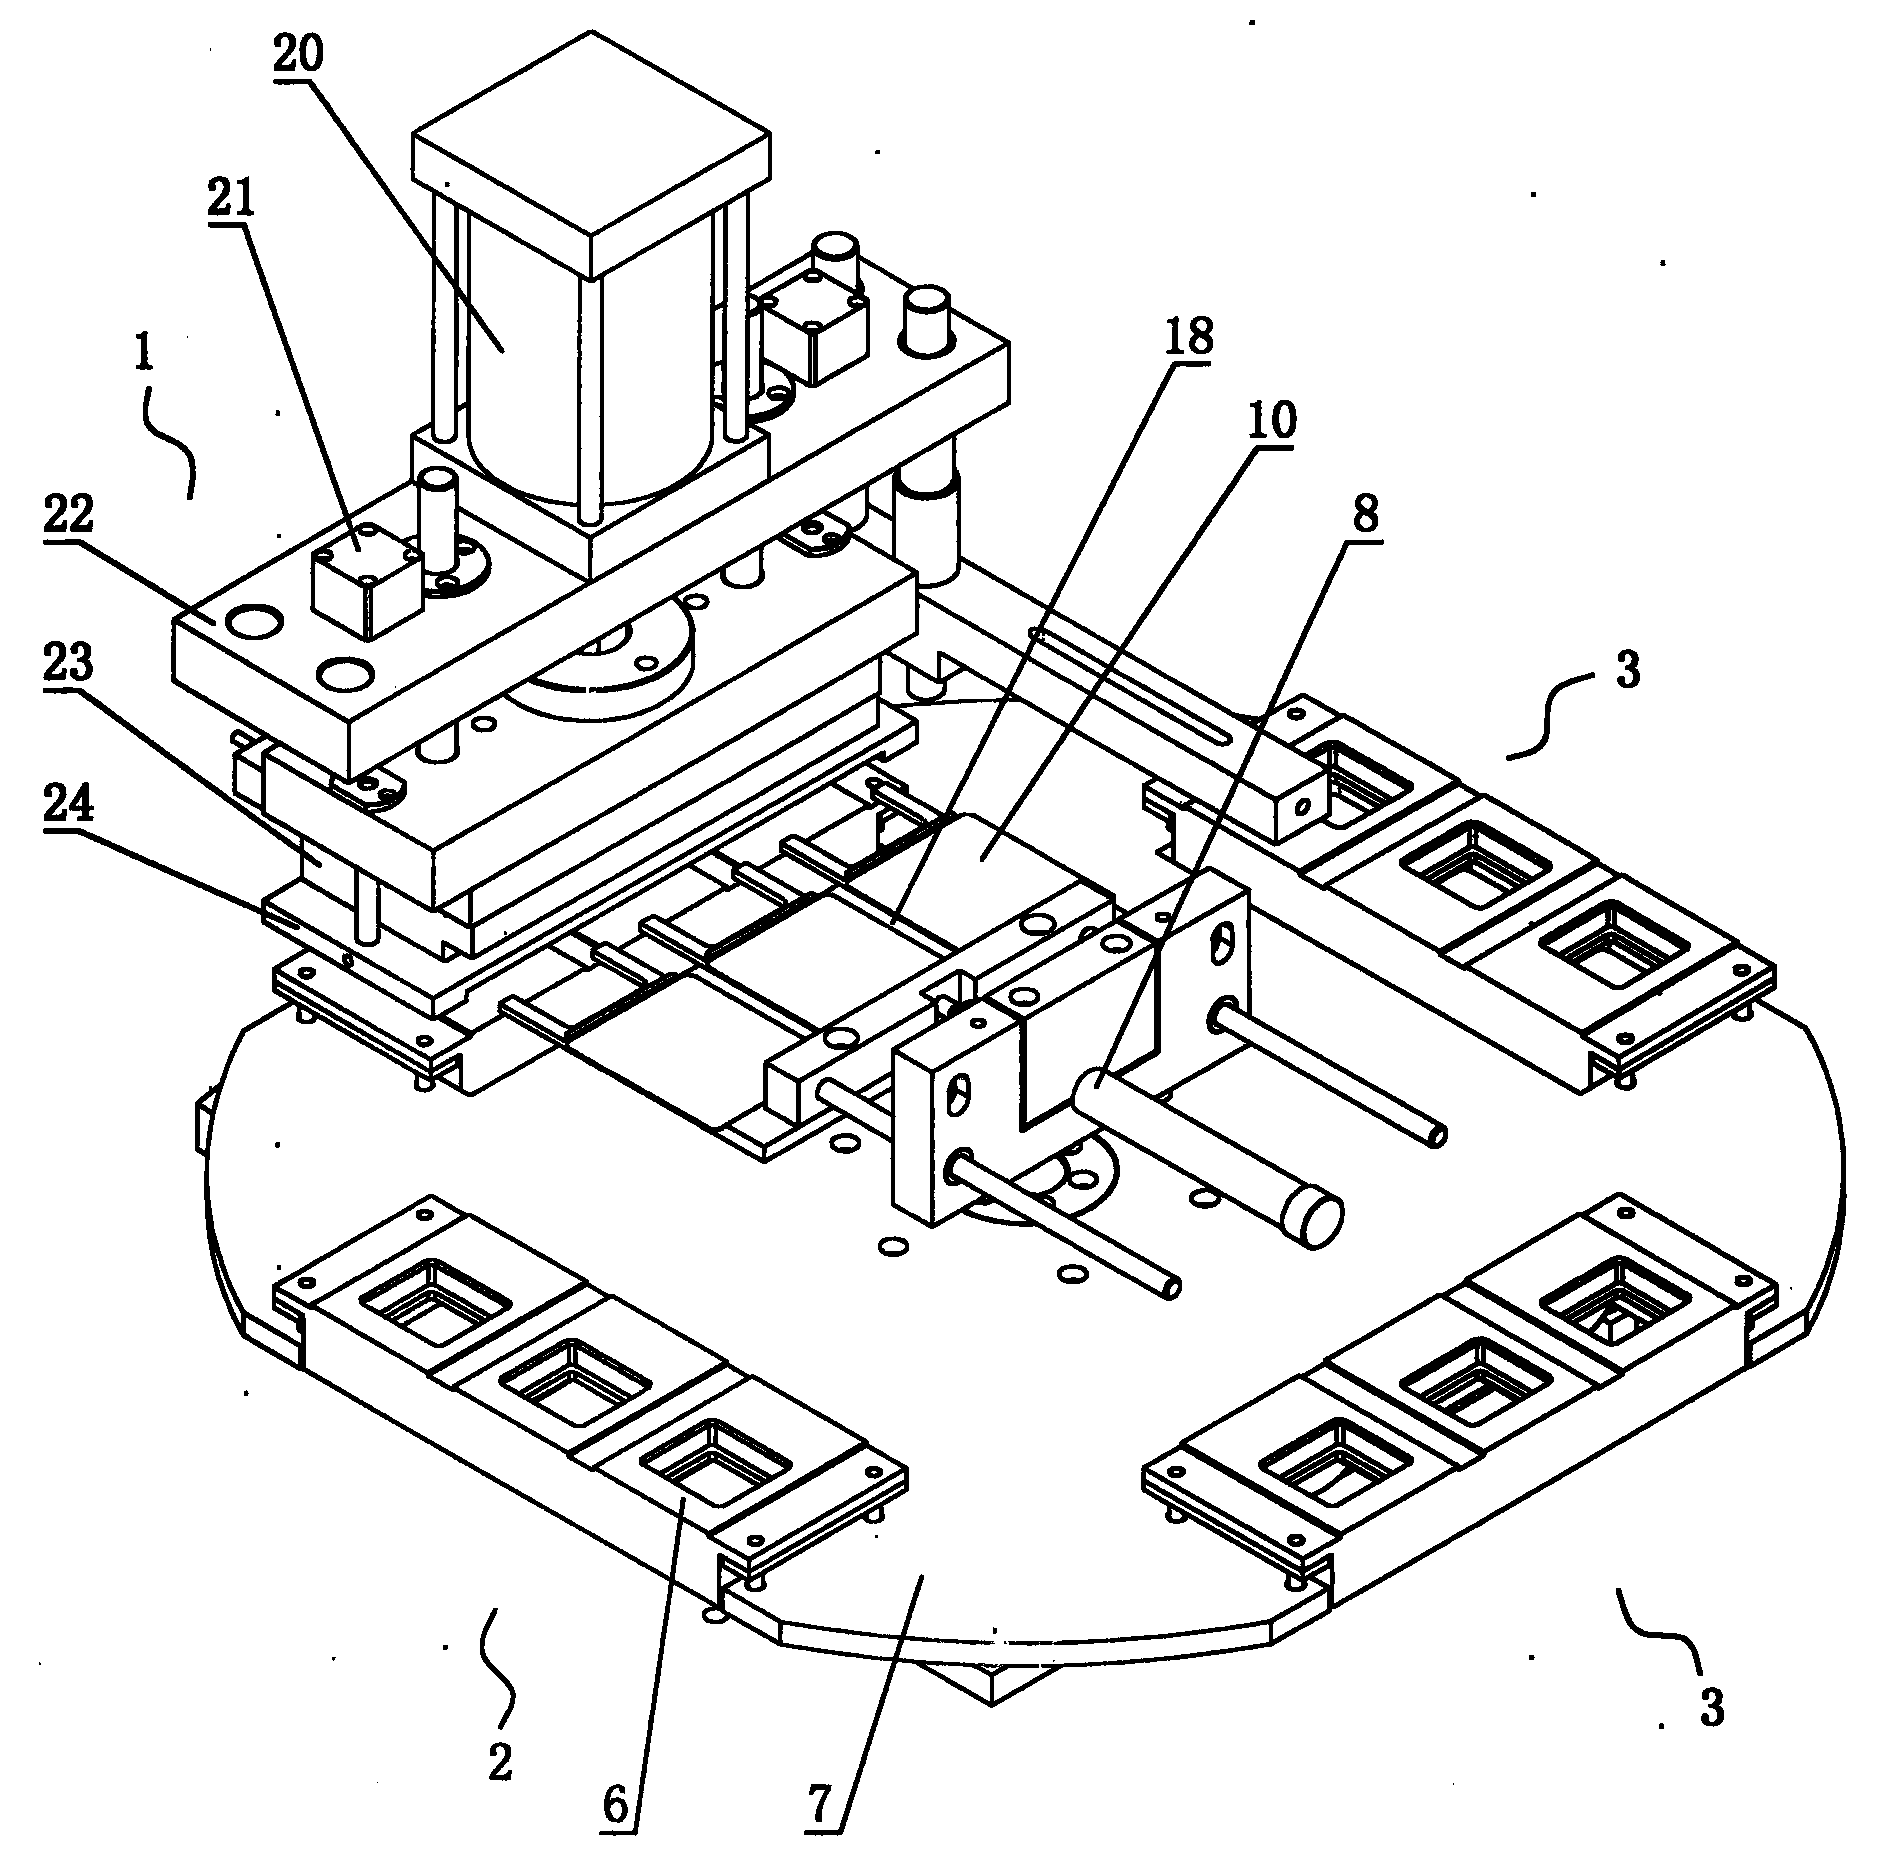 Molding mechanism of paper plastic packaging machine